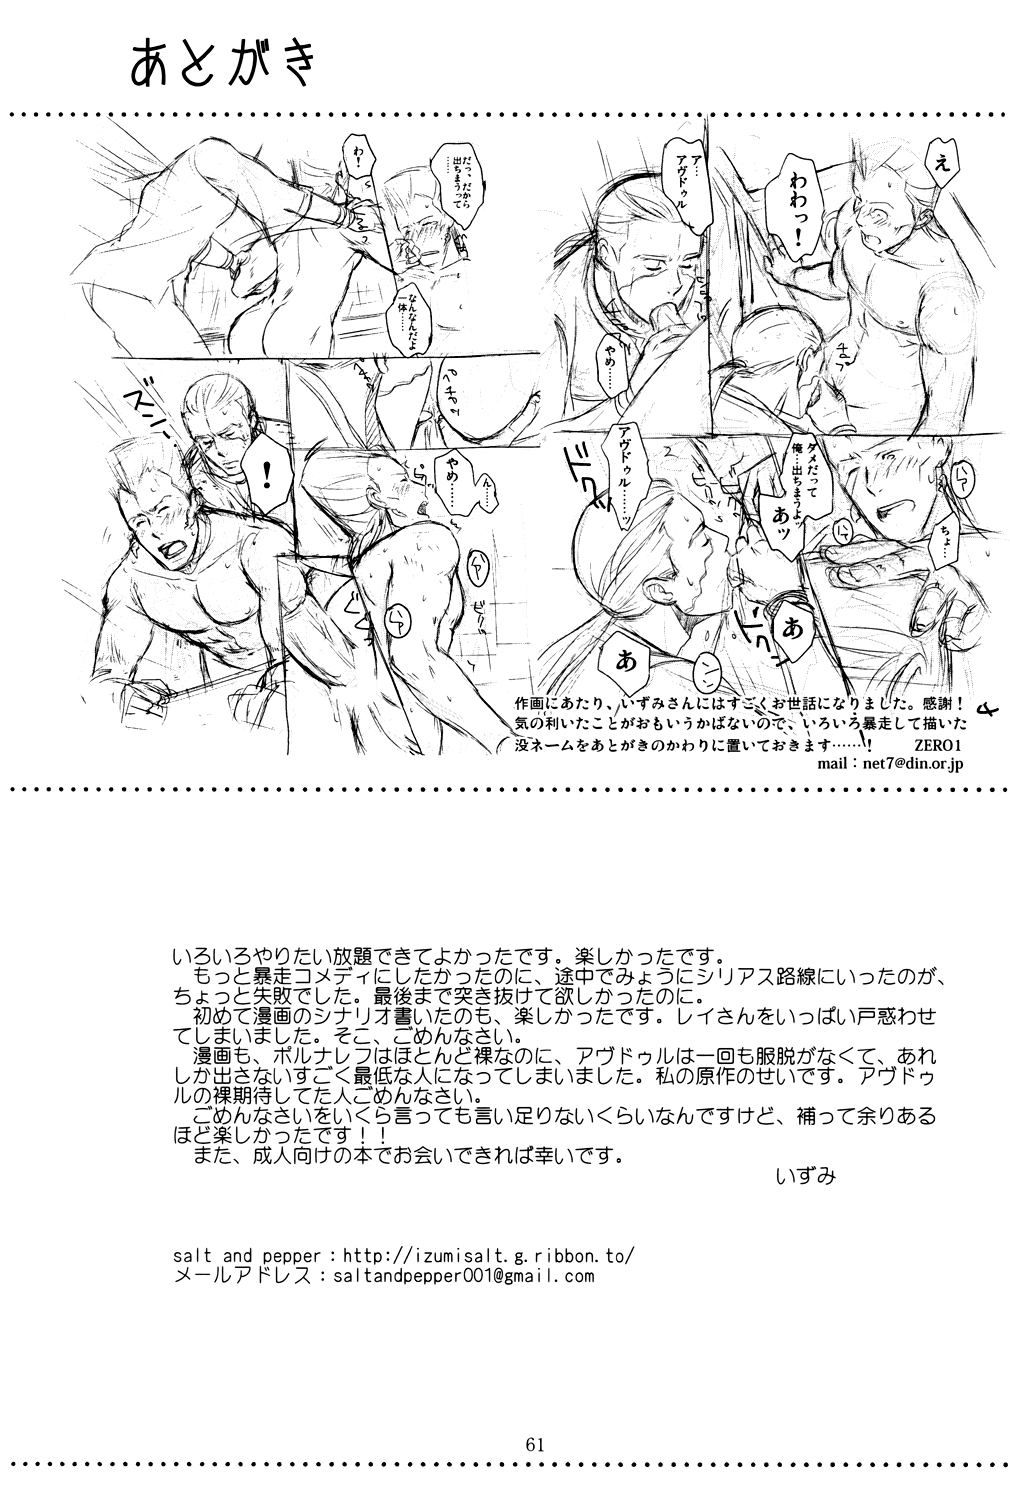 [ZERO1] Spellbound (JoJo's Bizarre Adventure - Stardust Crusaders) (Japanese) 